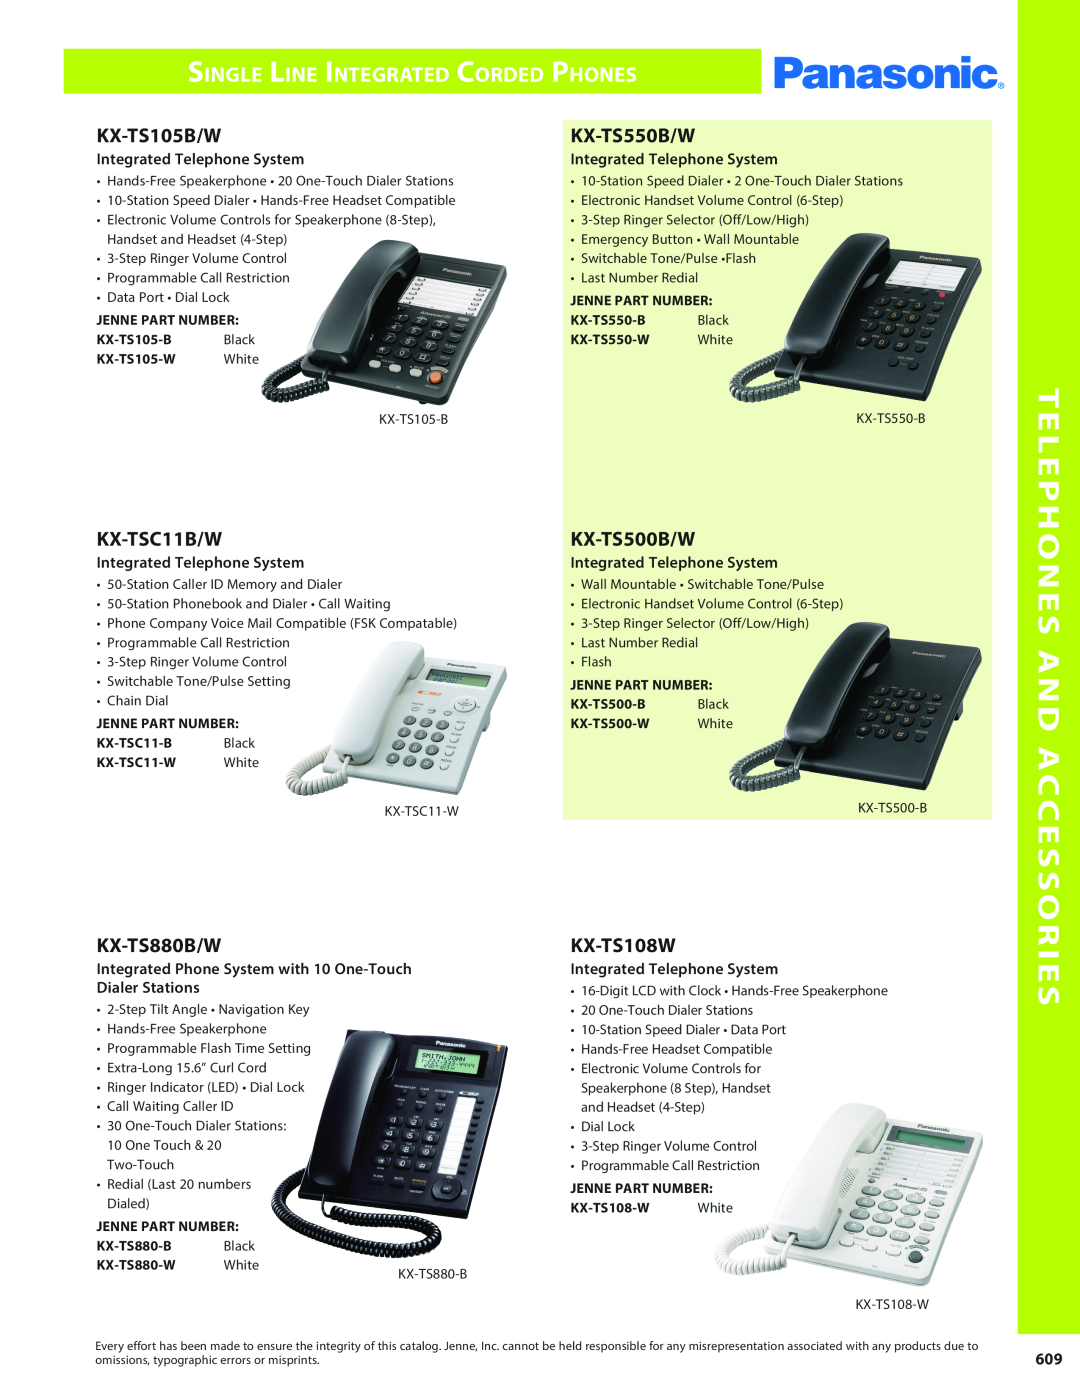 Panasonic PMPU2000 Single Line Integrated Corded Phones, Telephones And Accessories, KX-TS105B/W, KX-TS550B/W, KX-TSC11B/W 